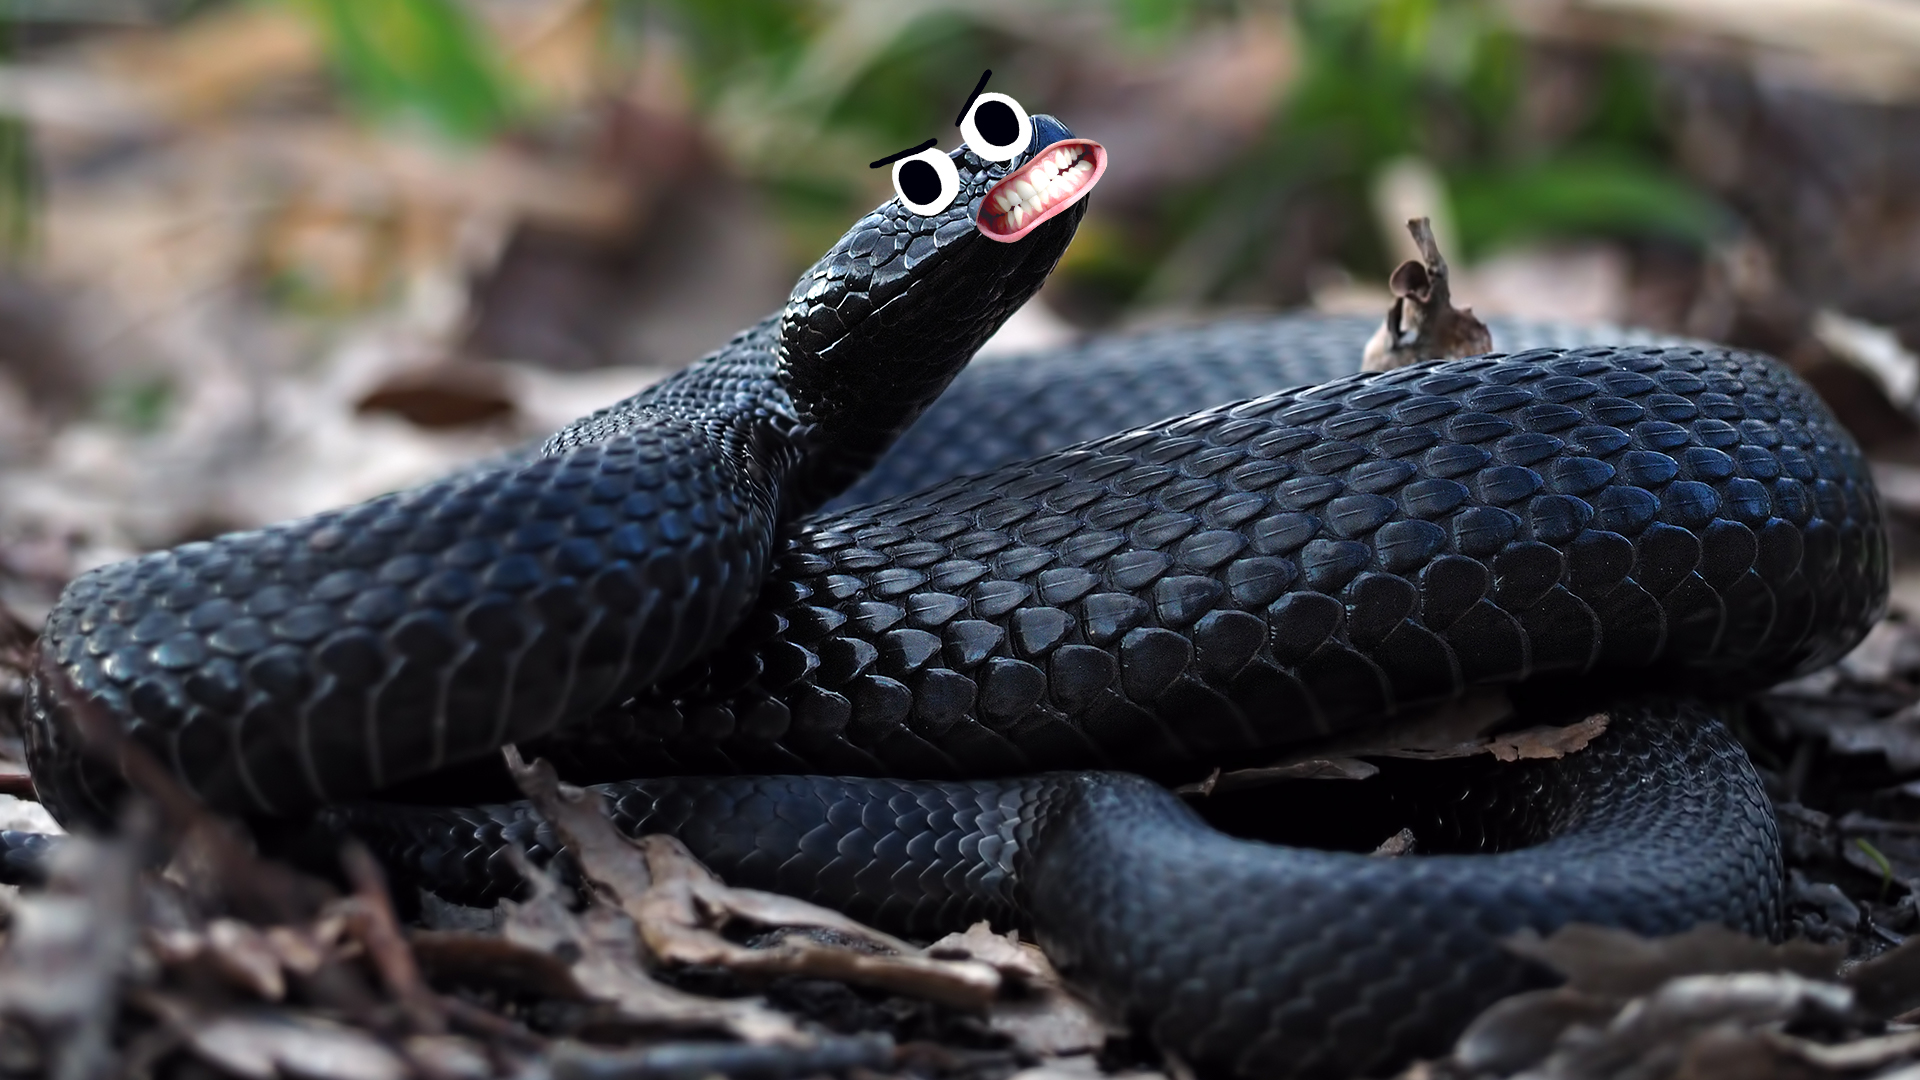 A black, hissing snake